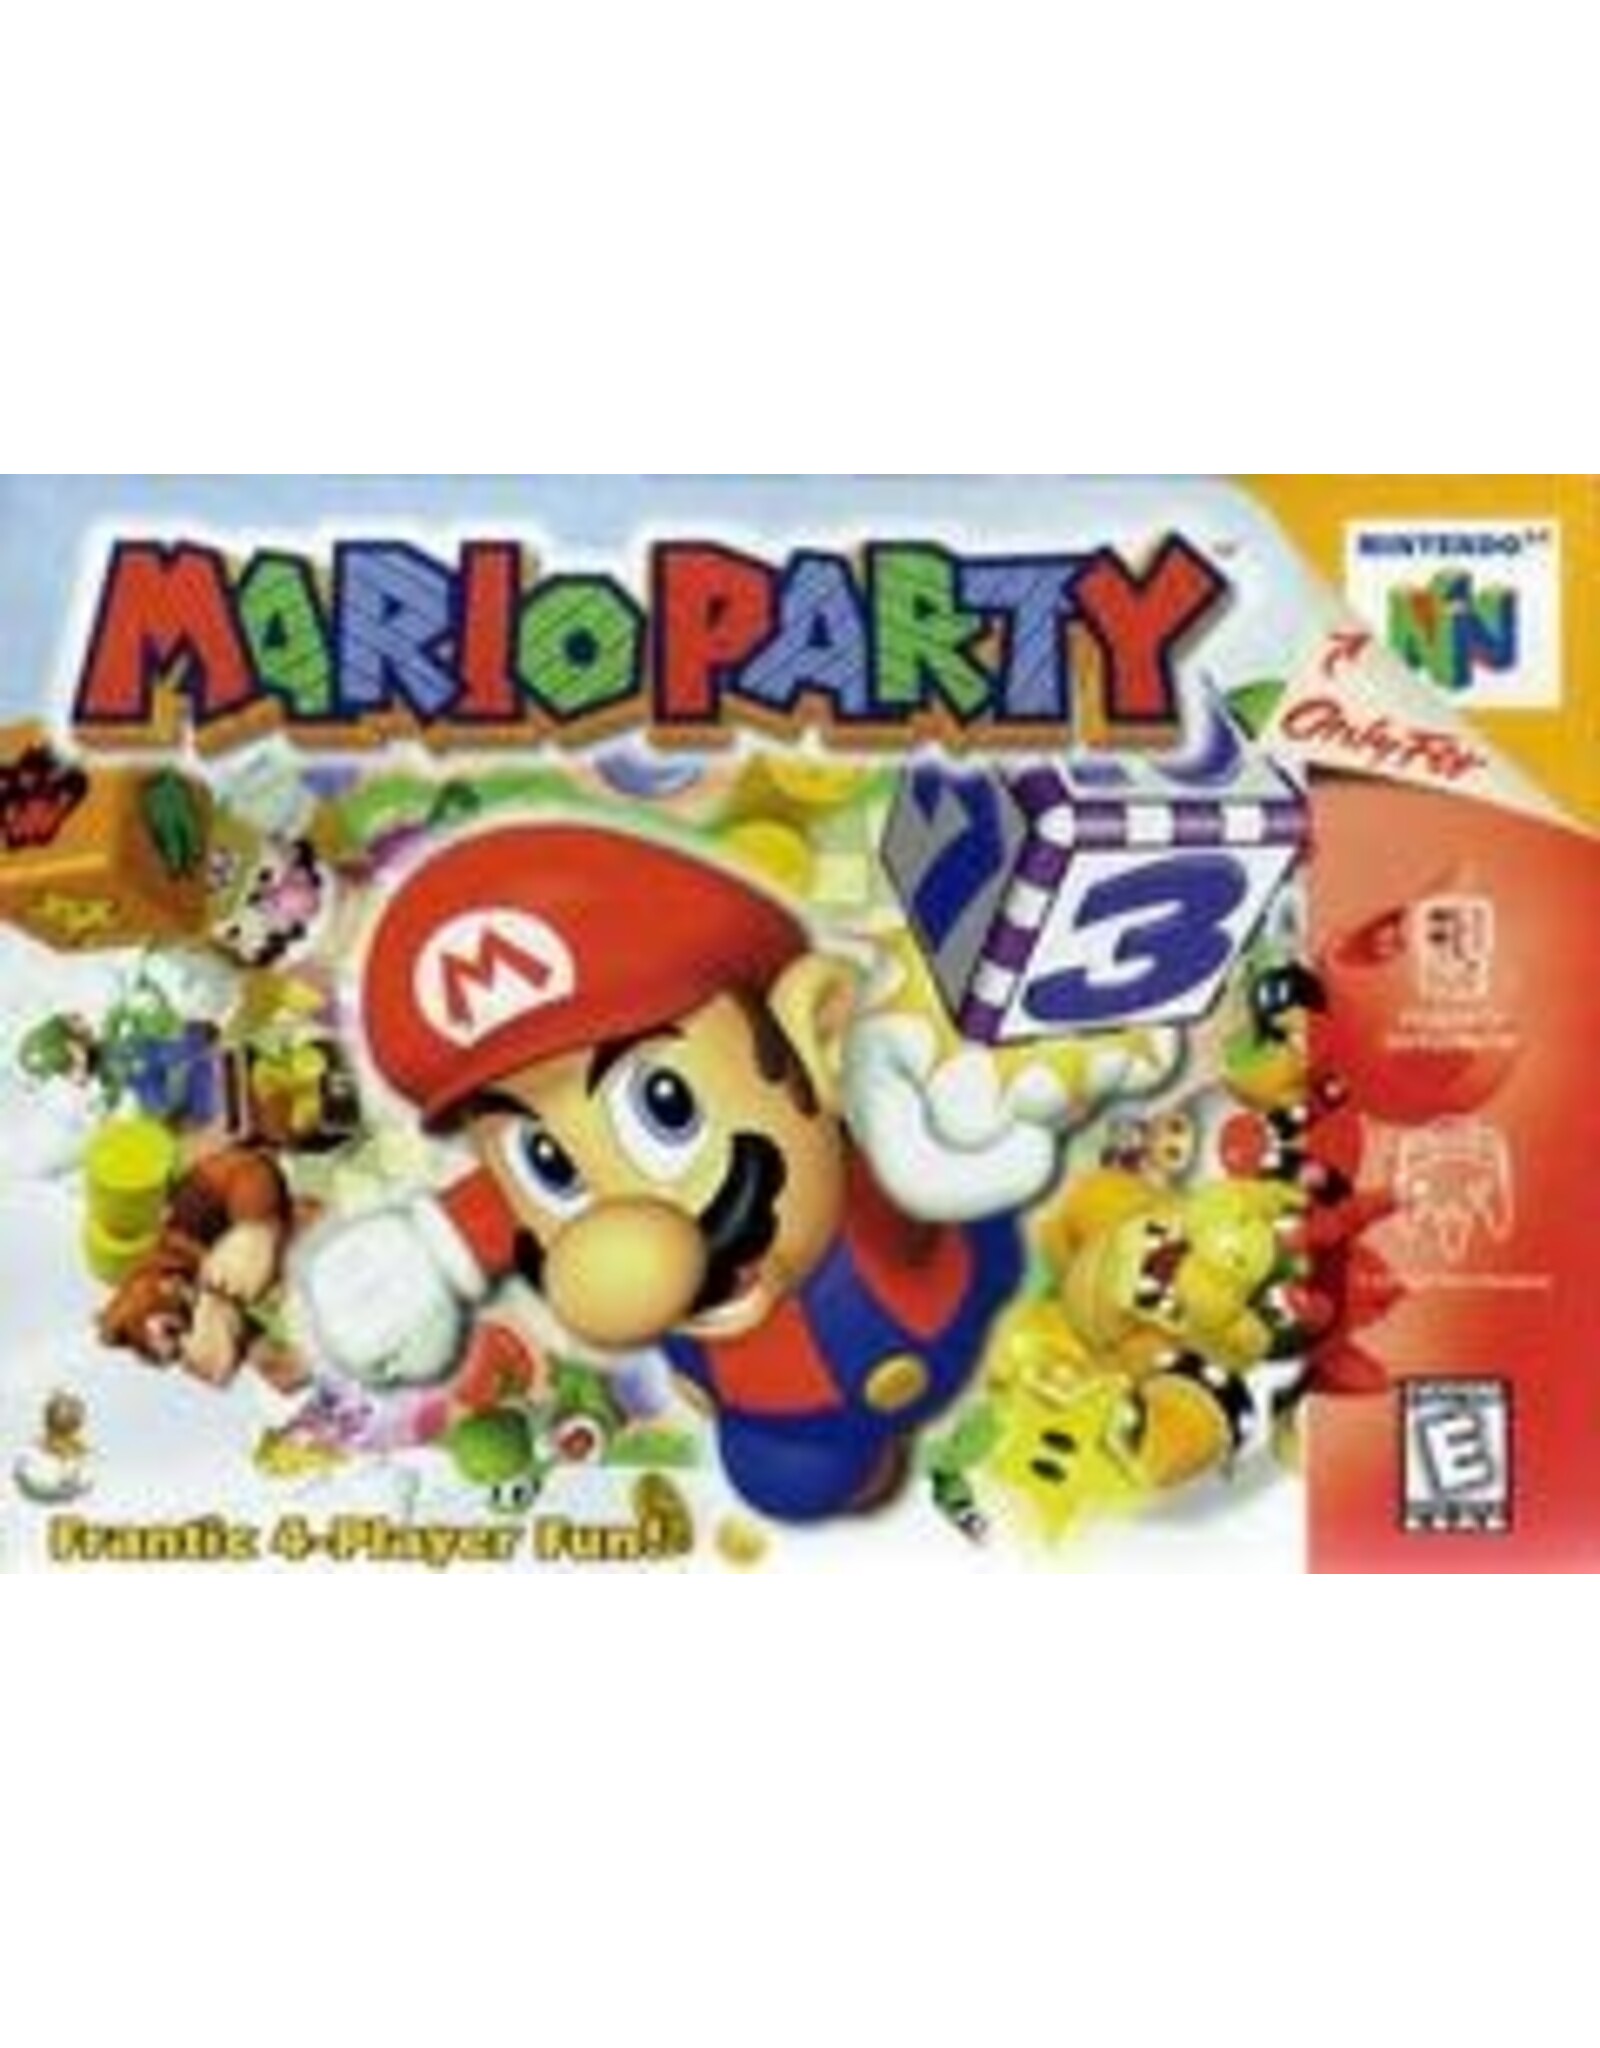 Nintendo 64 Mario Party (Boxed, No Manual, Heavily Damaged Box)